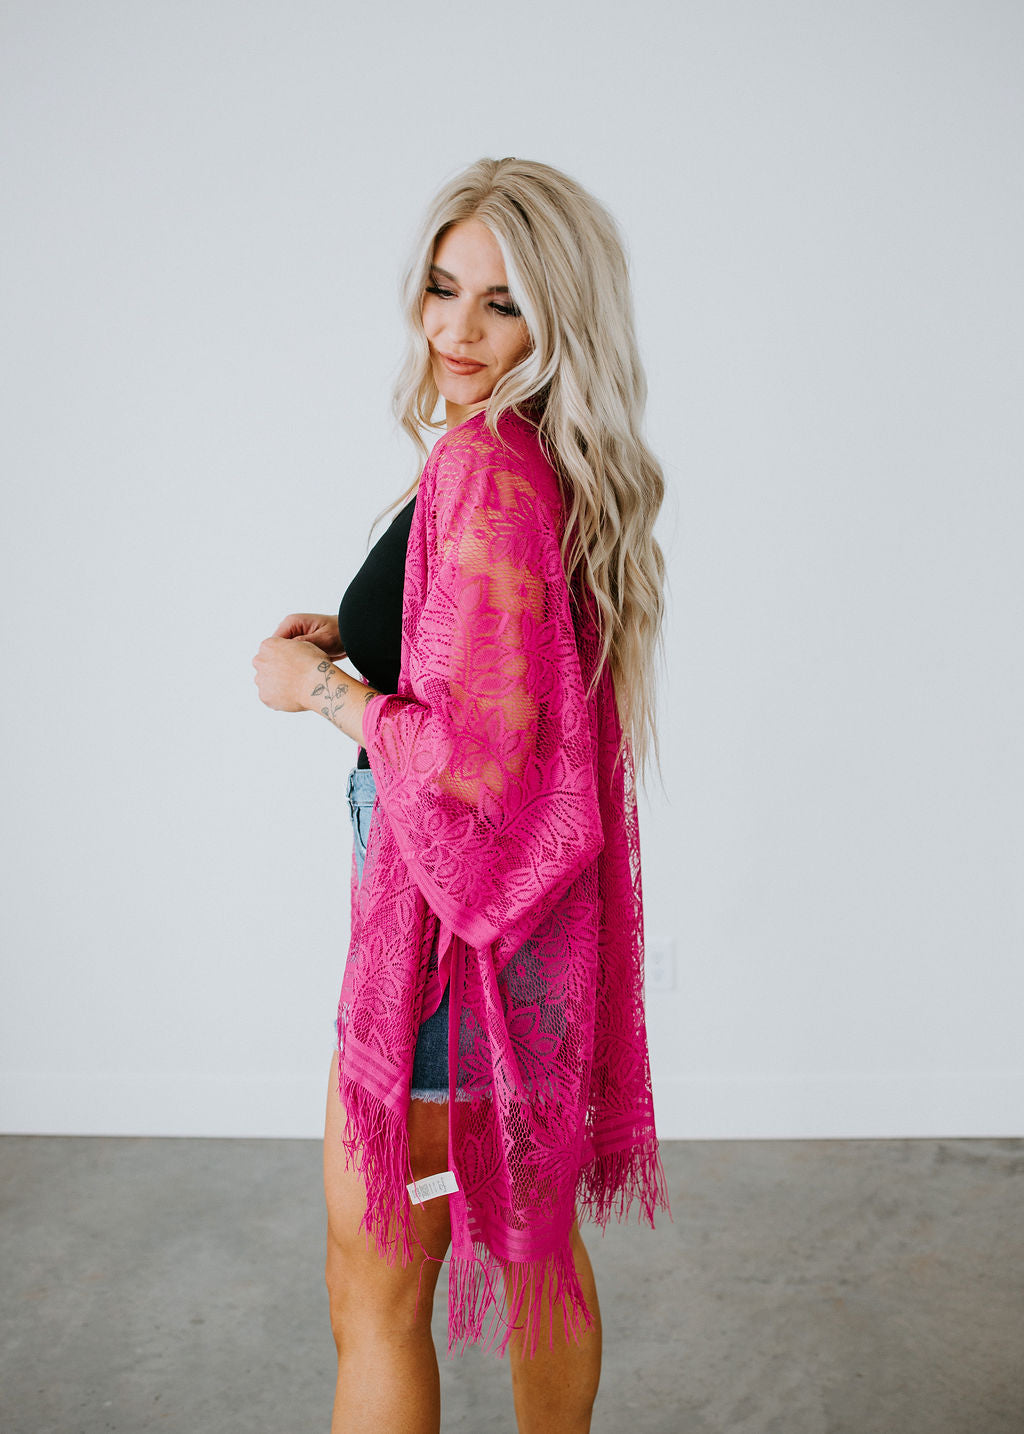 The Kate Majestic Lace Kimono